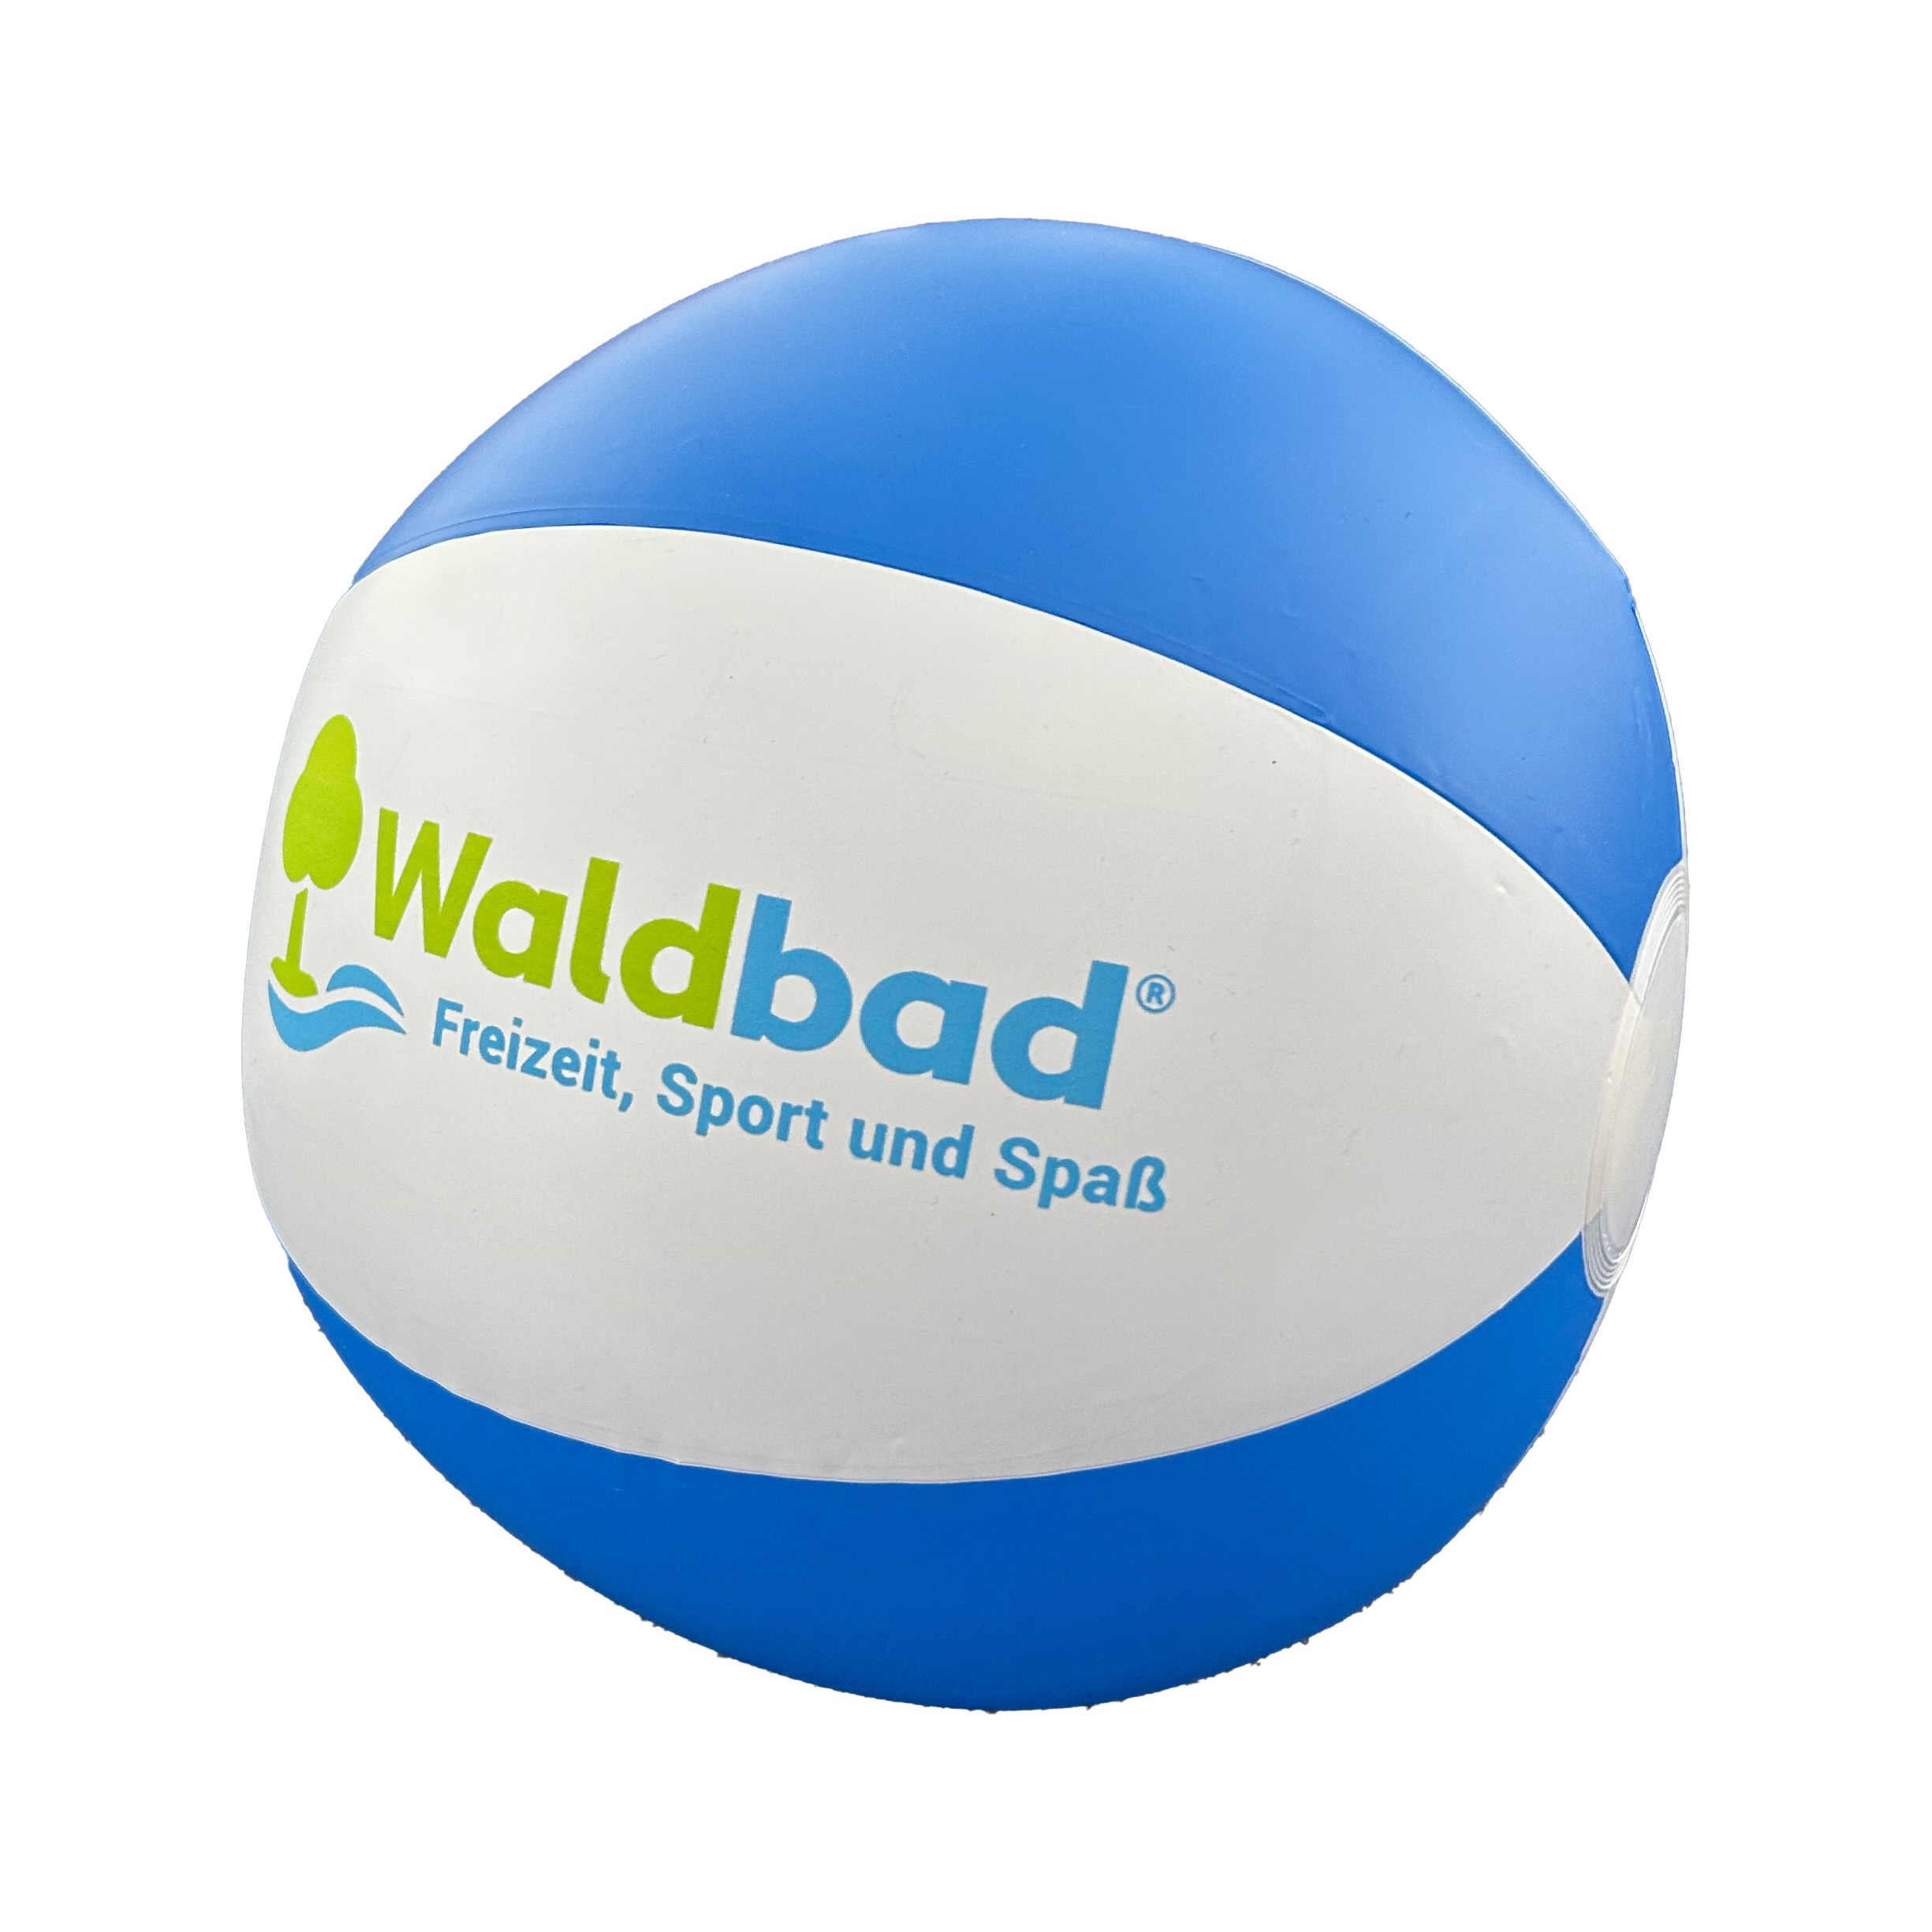 Wasserball Waldbad Gallery 6